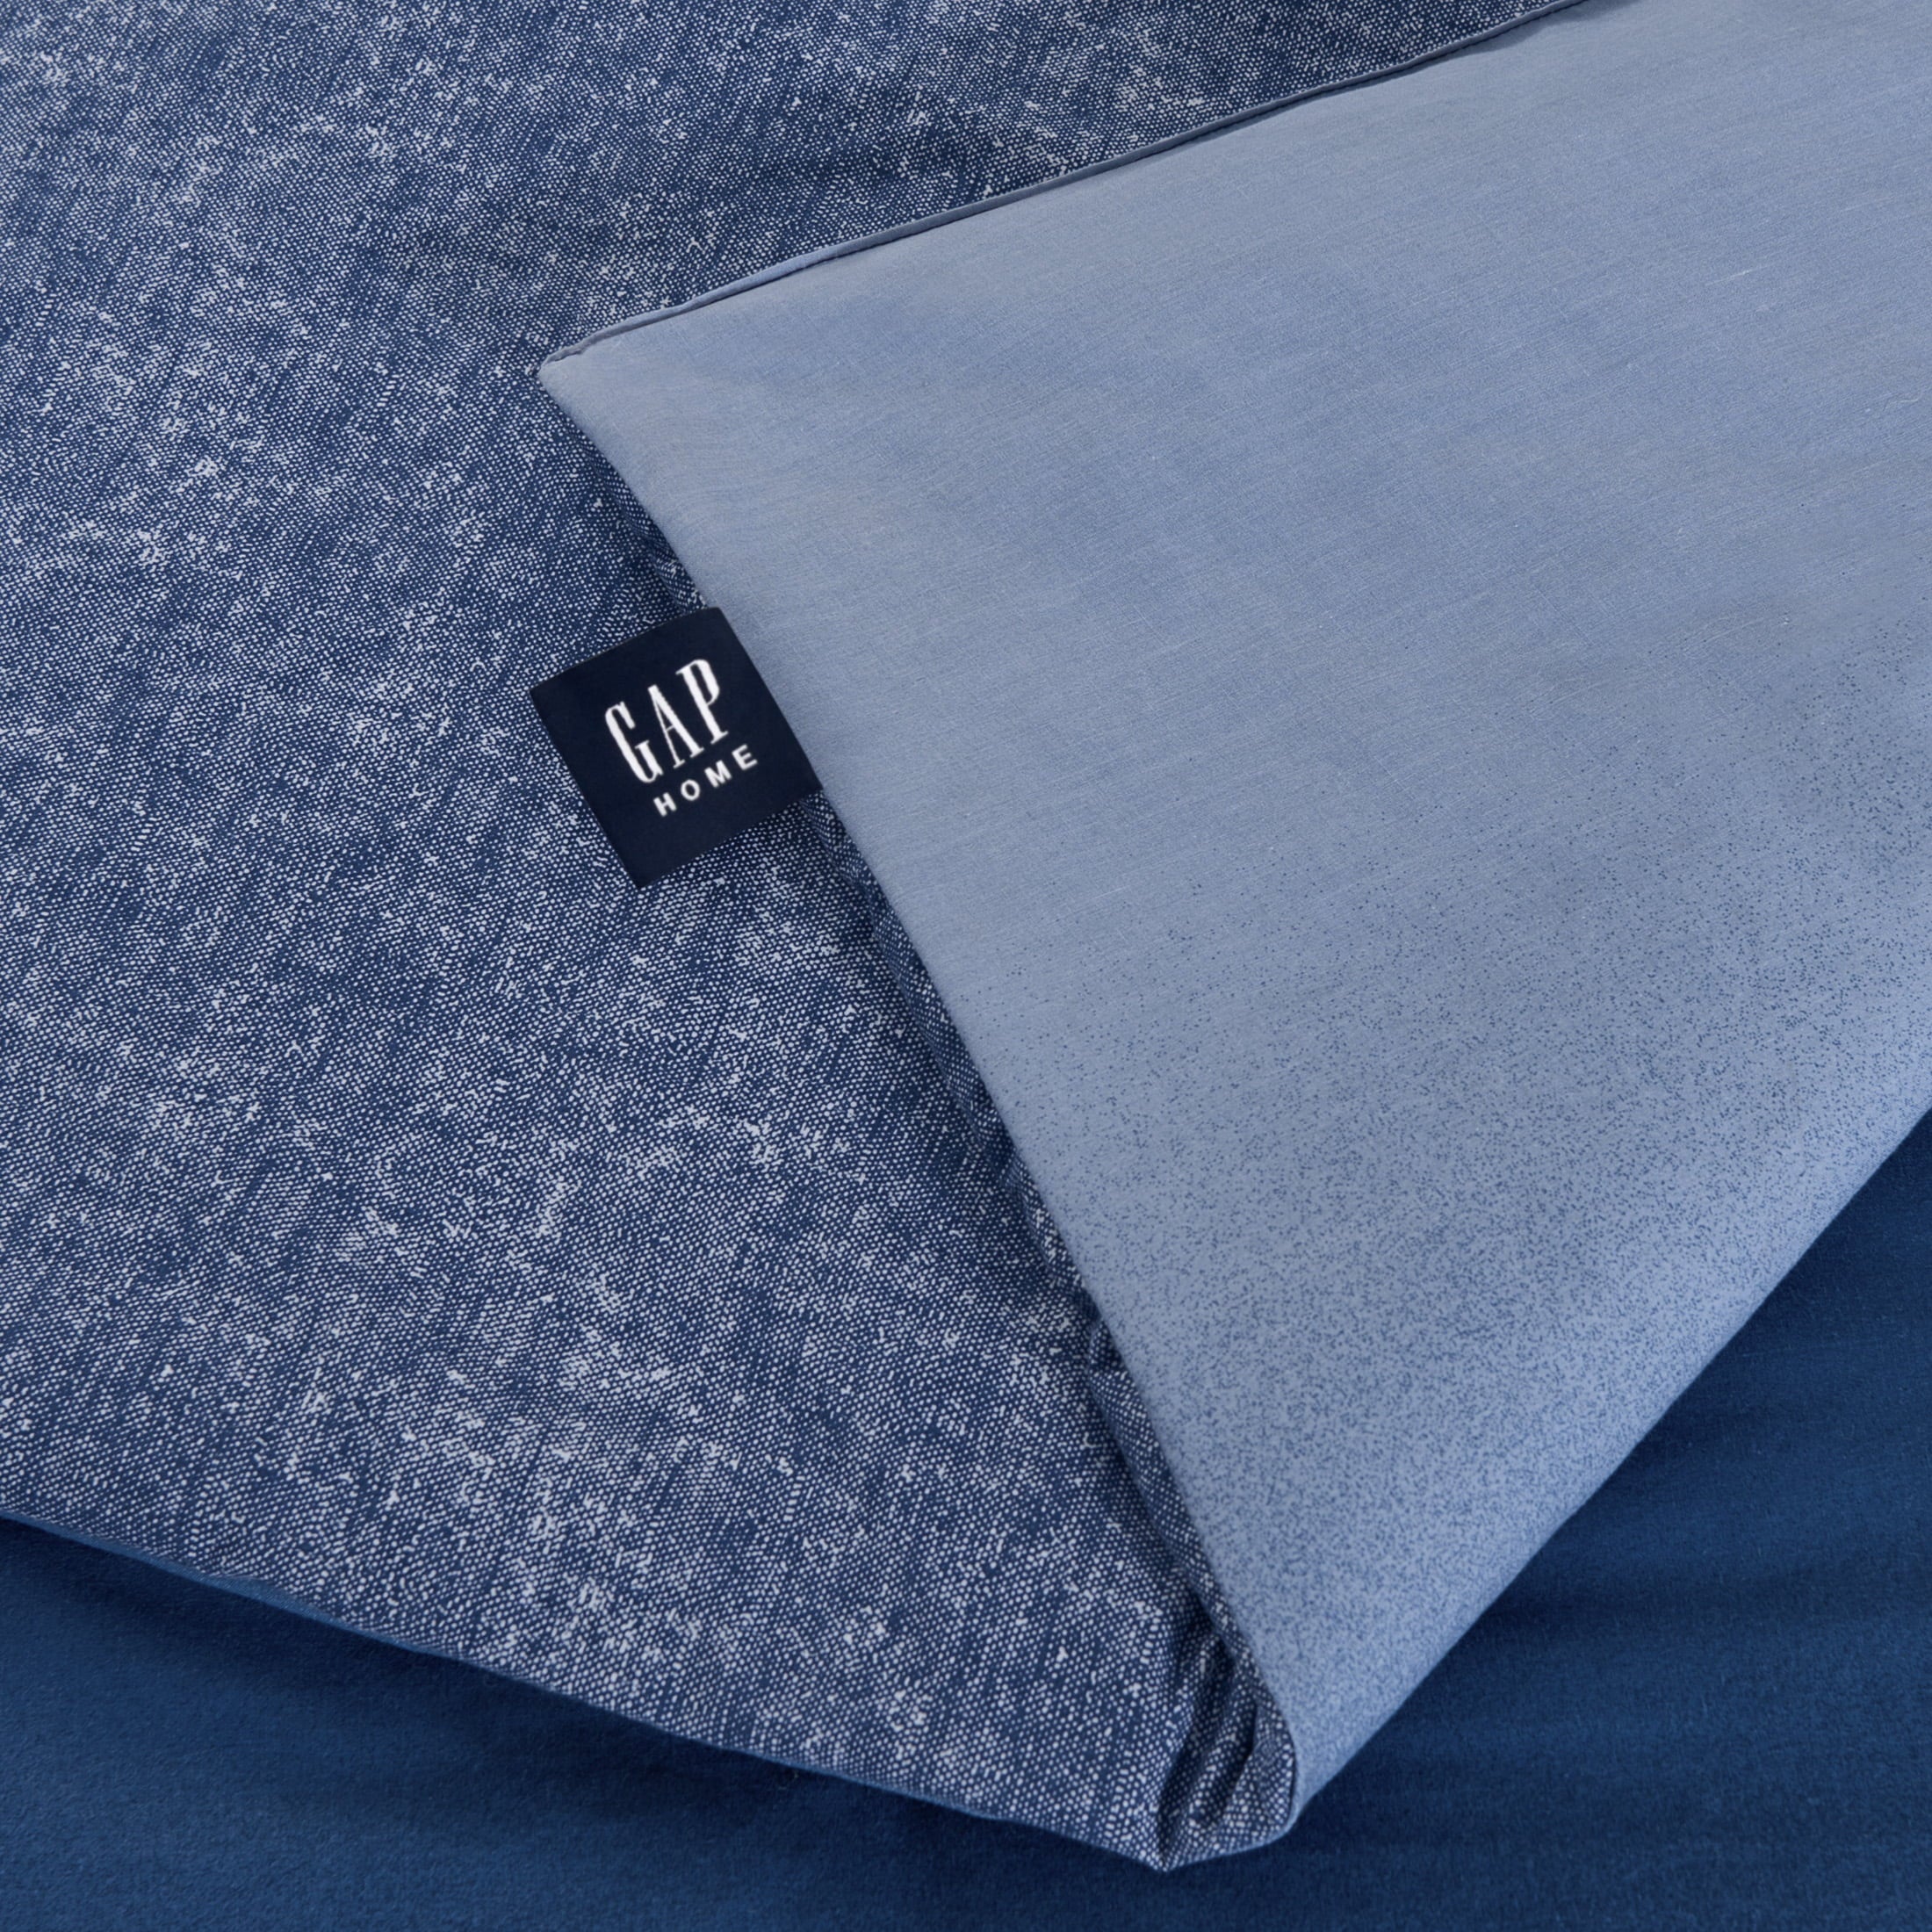 Gap Home Ombre Reversible Organic Cotton Blend Comforter Set, King, Blue, 3-Pieces